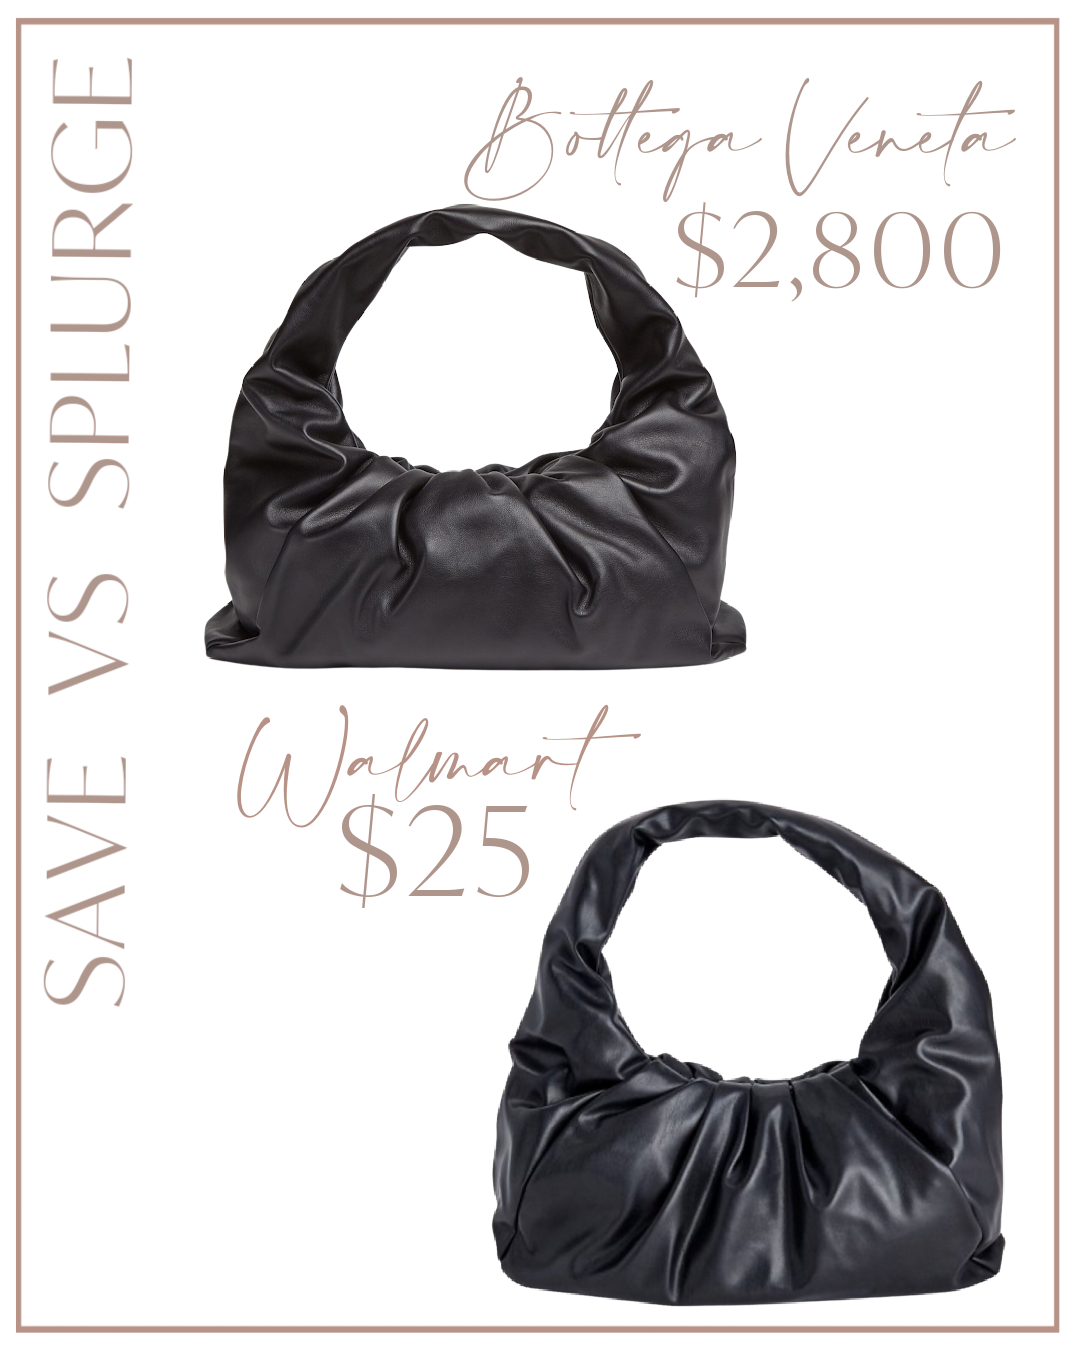 Louis Vuitton inspired bag from Walmart part 3 #dupe #handbags #walmart 